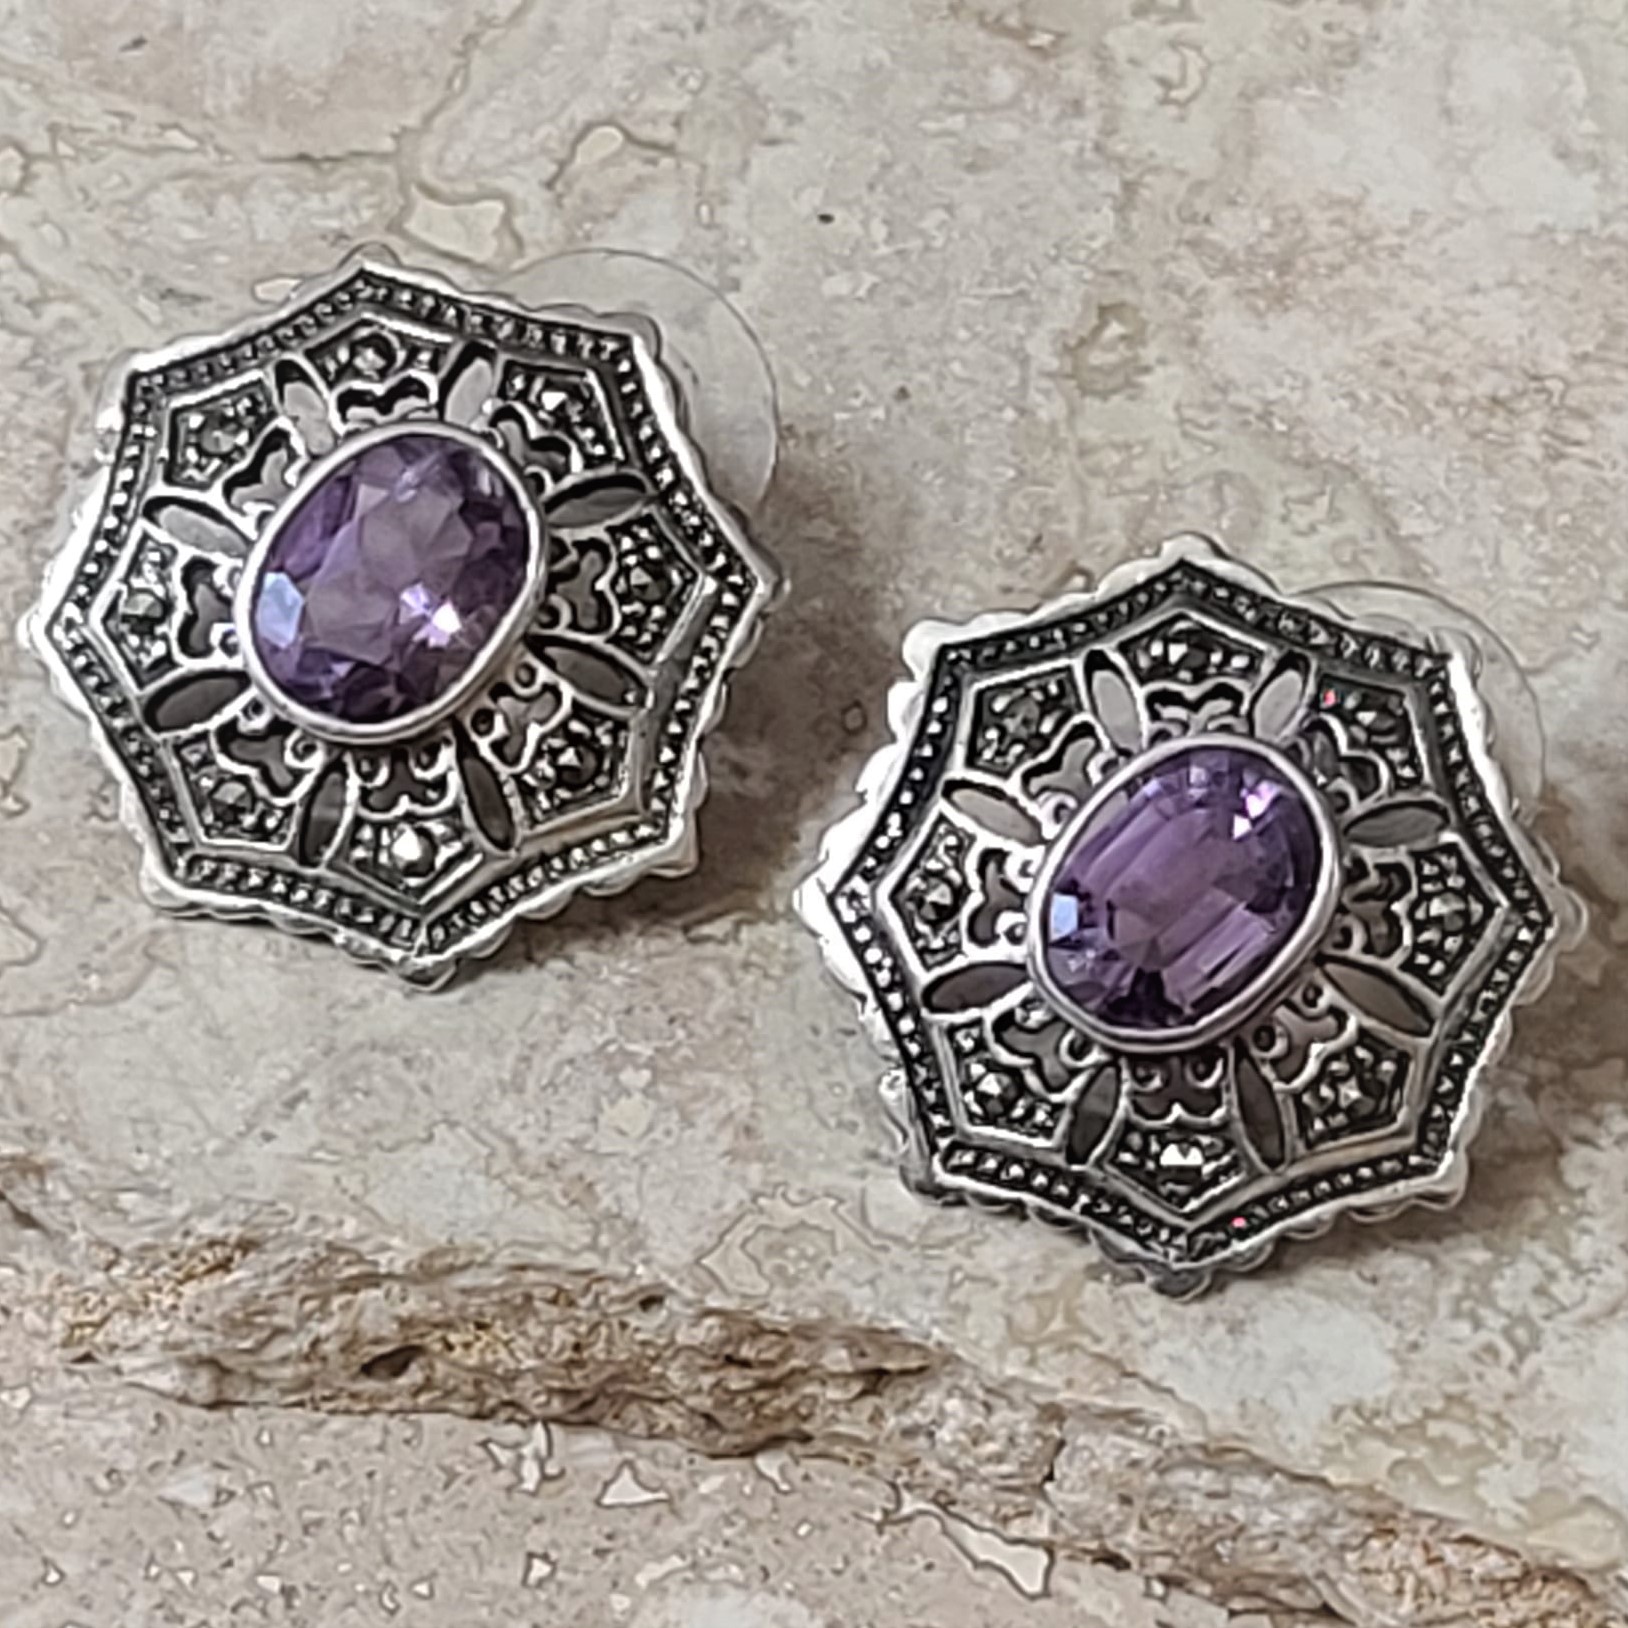 Art Deco style marcasite and amethyst gemstone earrings